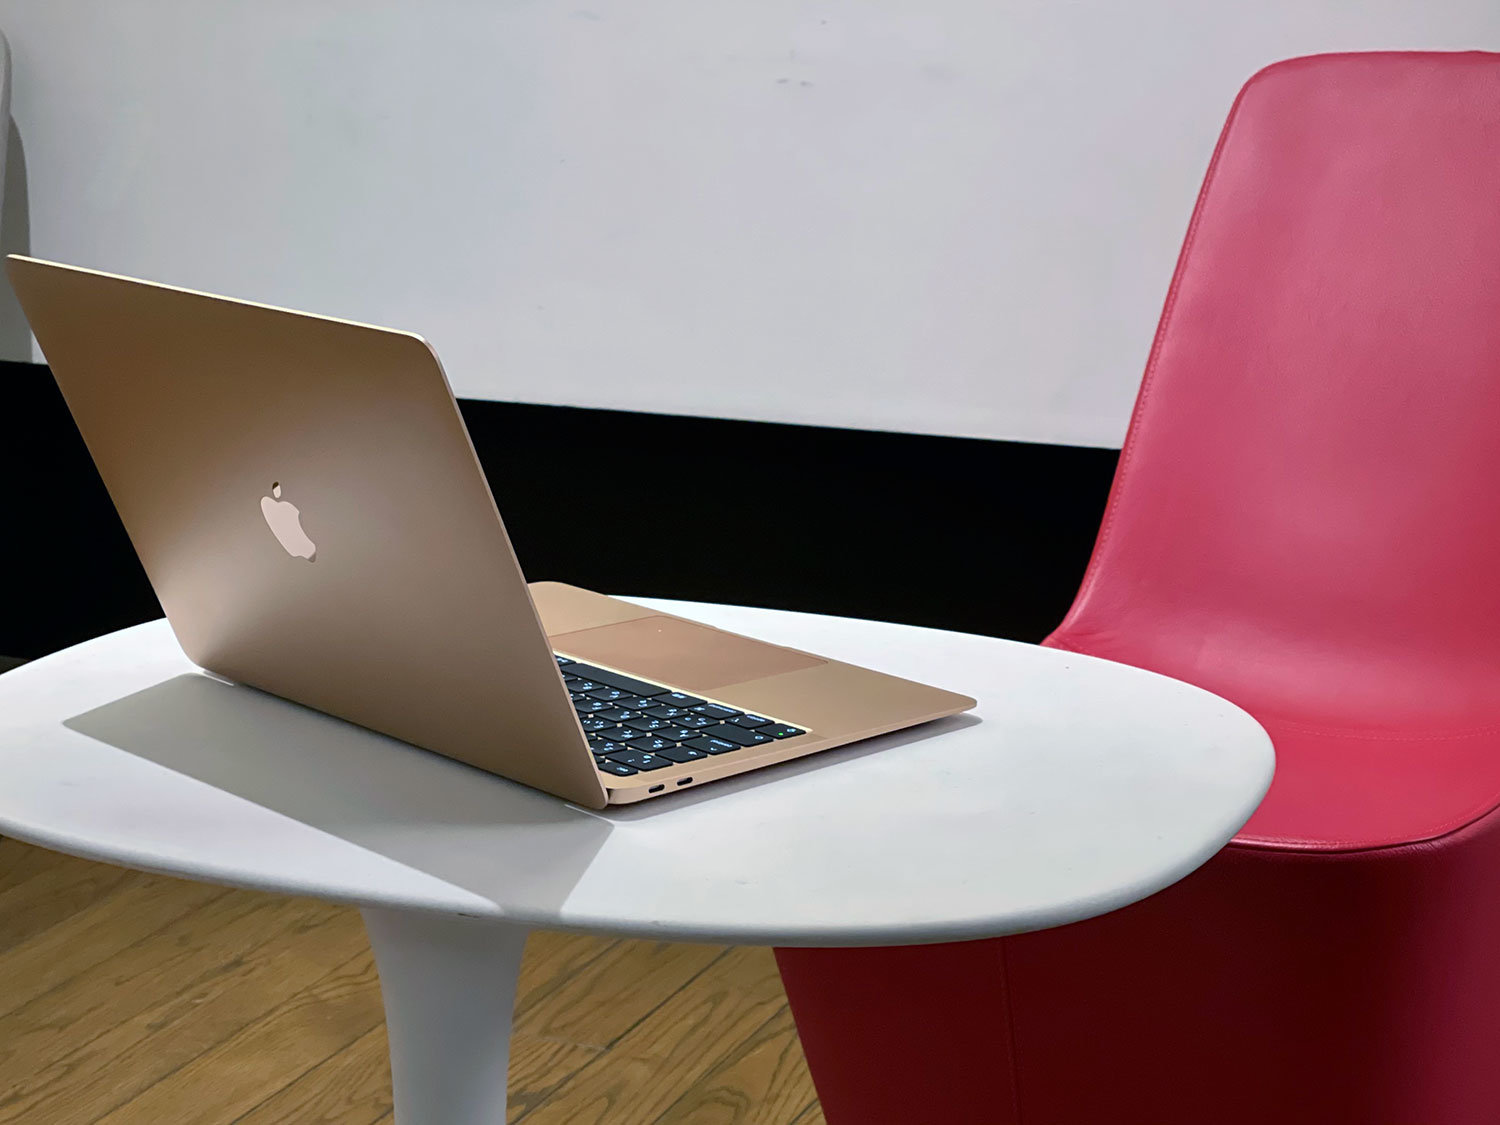 M1搭載MacBook Airは、最低スペックでもIntel版MacBook Proを寄せ付けない性能だった